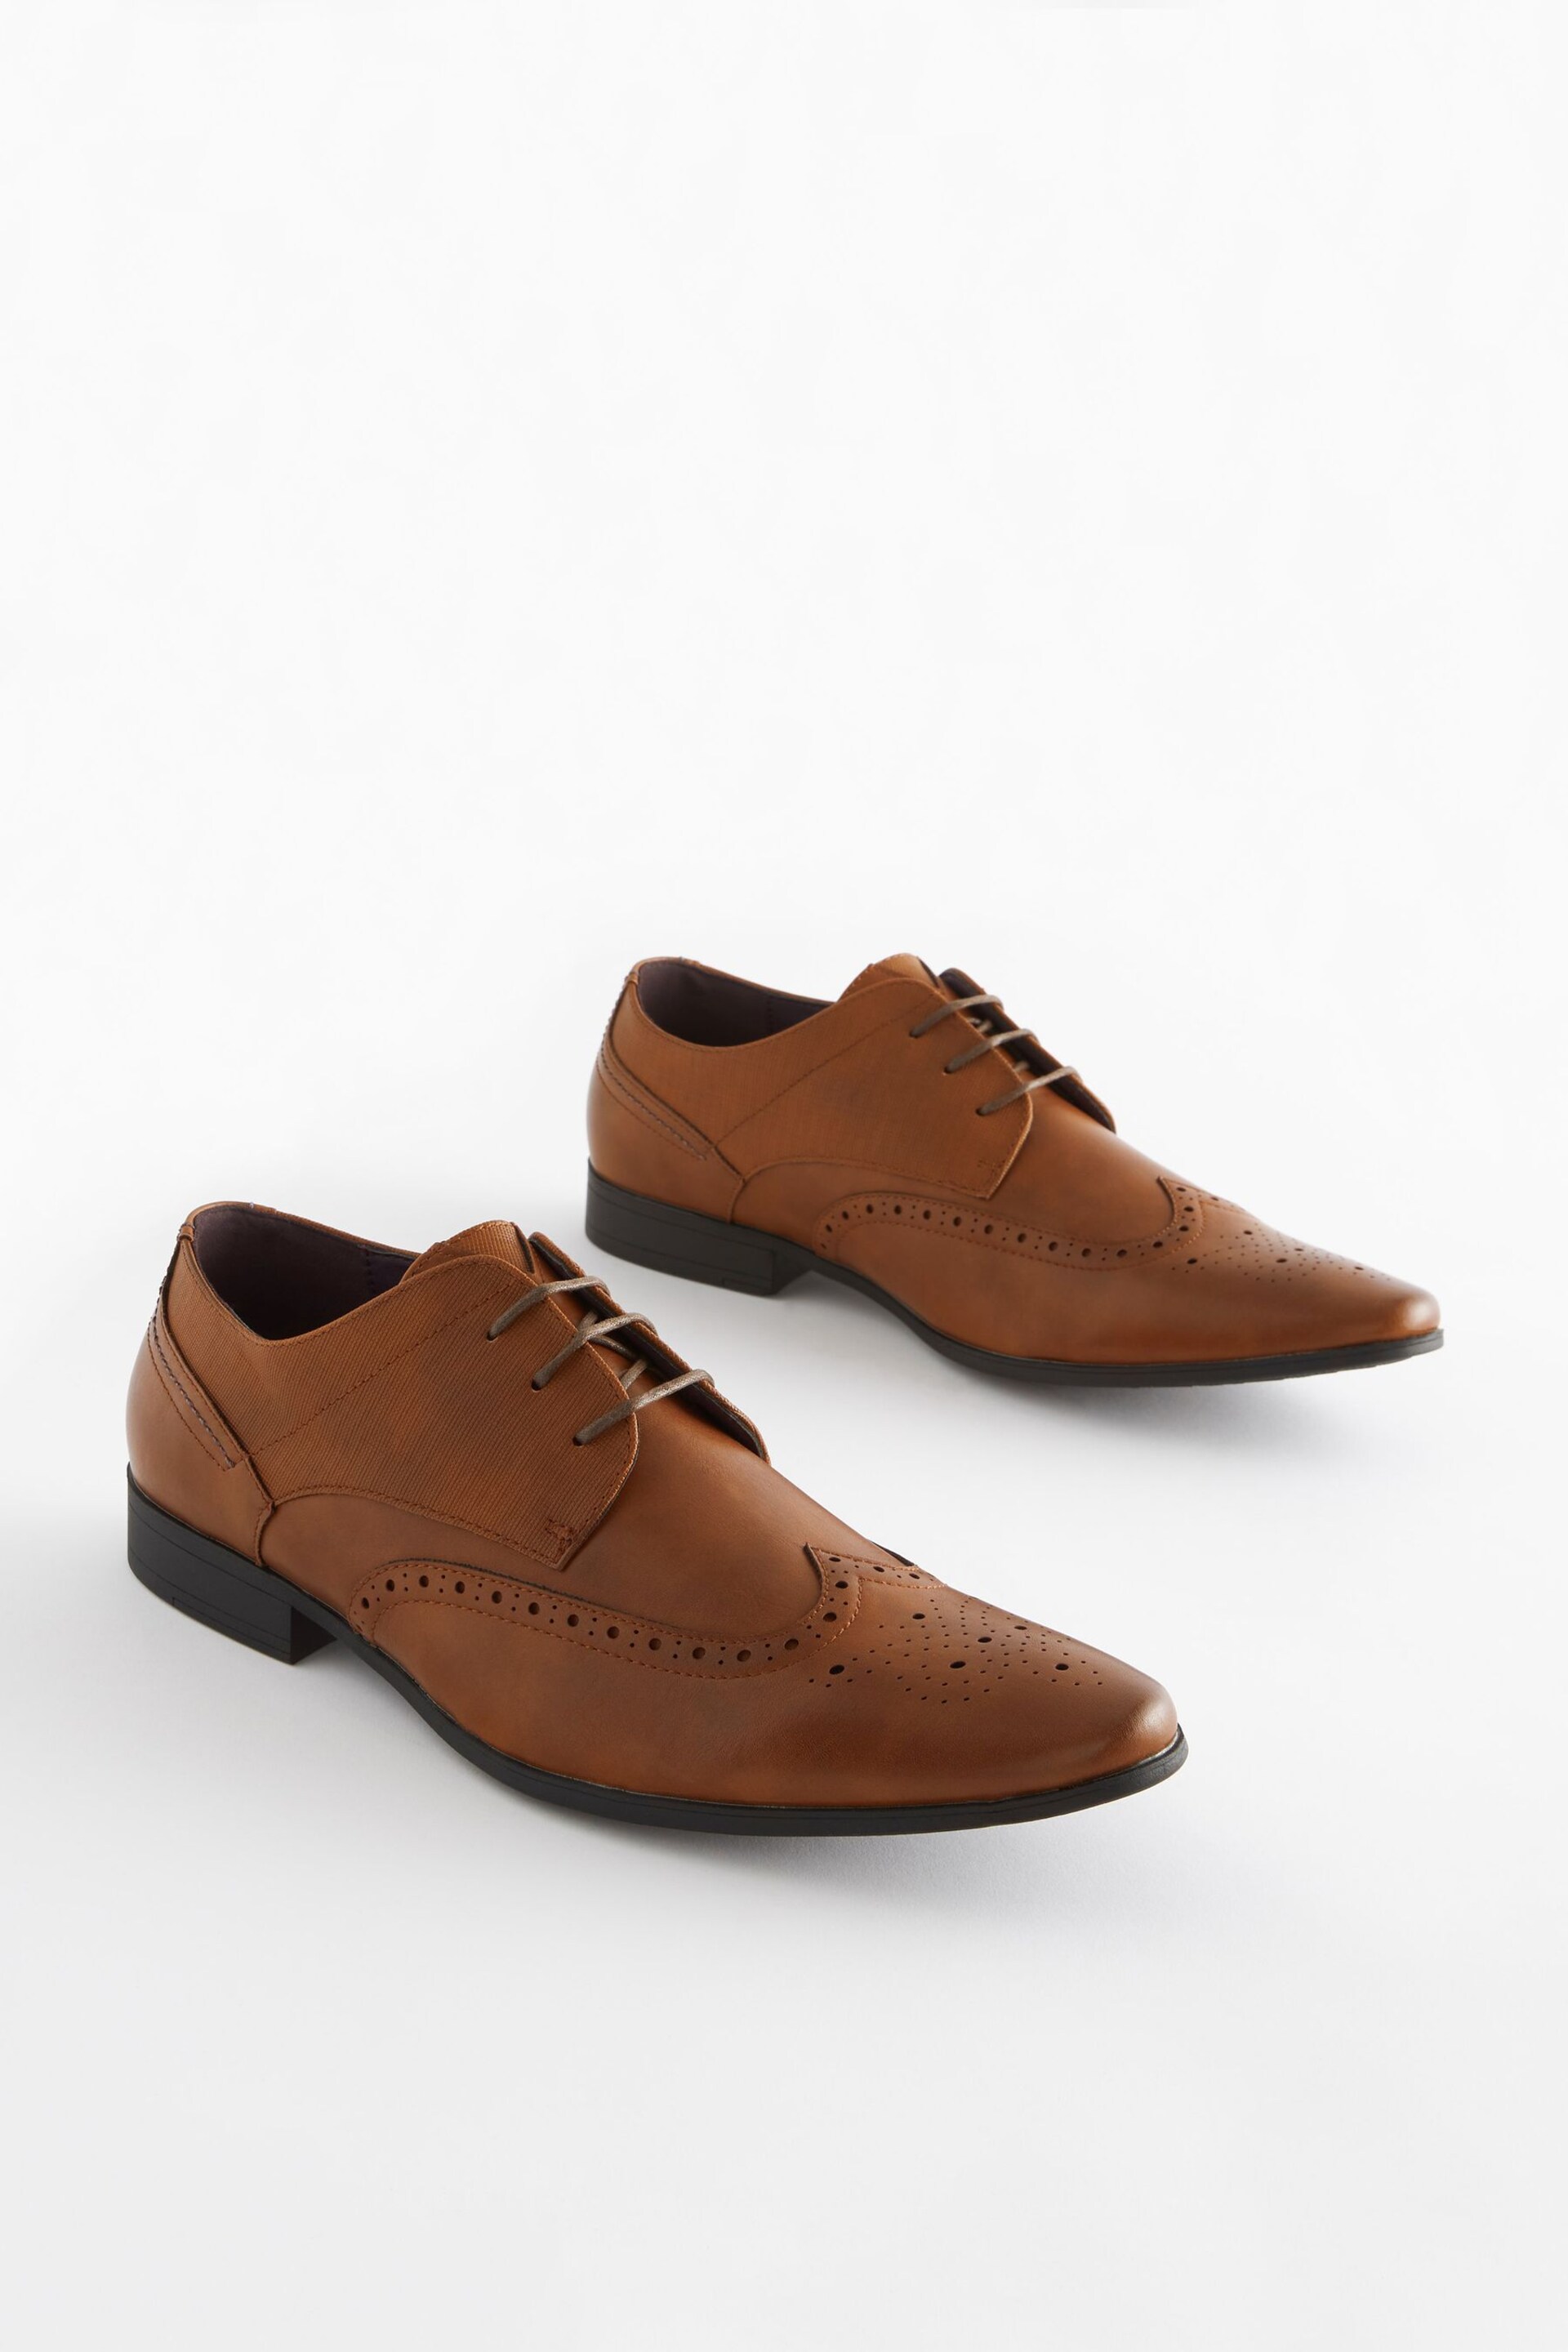 Tan Brown Brogue Shoes - Image 1 of 6